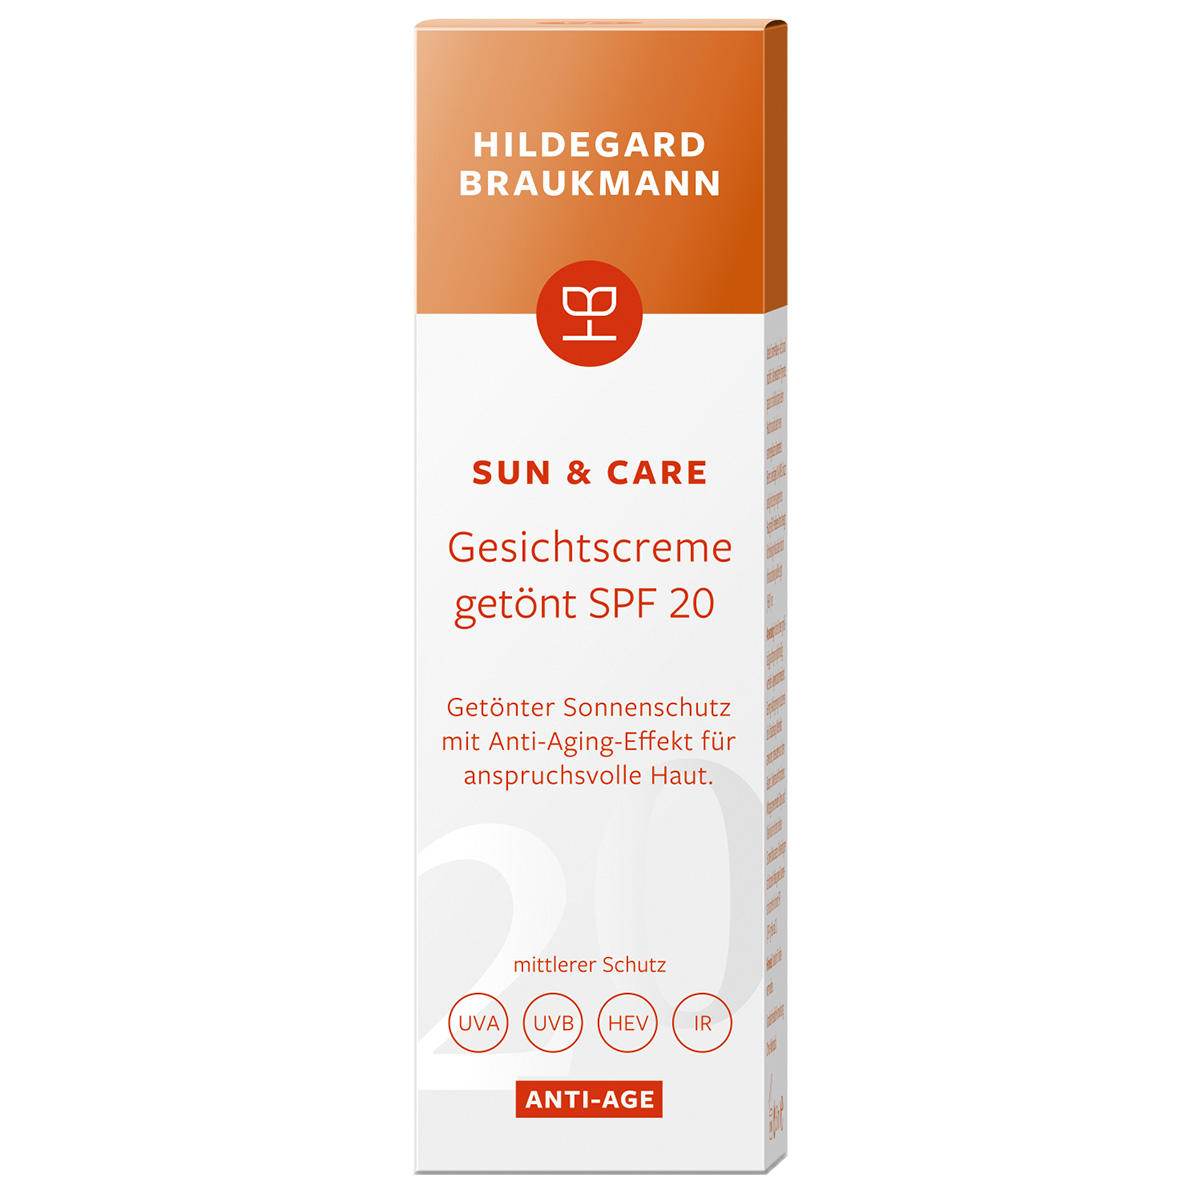 Hildegard Braukmann sun & care Gesichtscreme getönt SPF 20 50 ml - 2